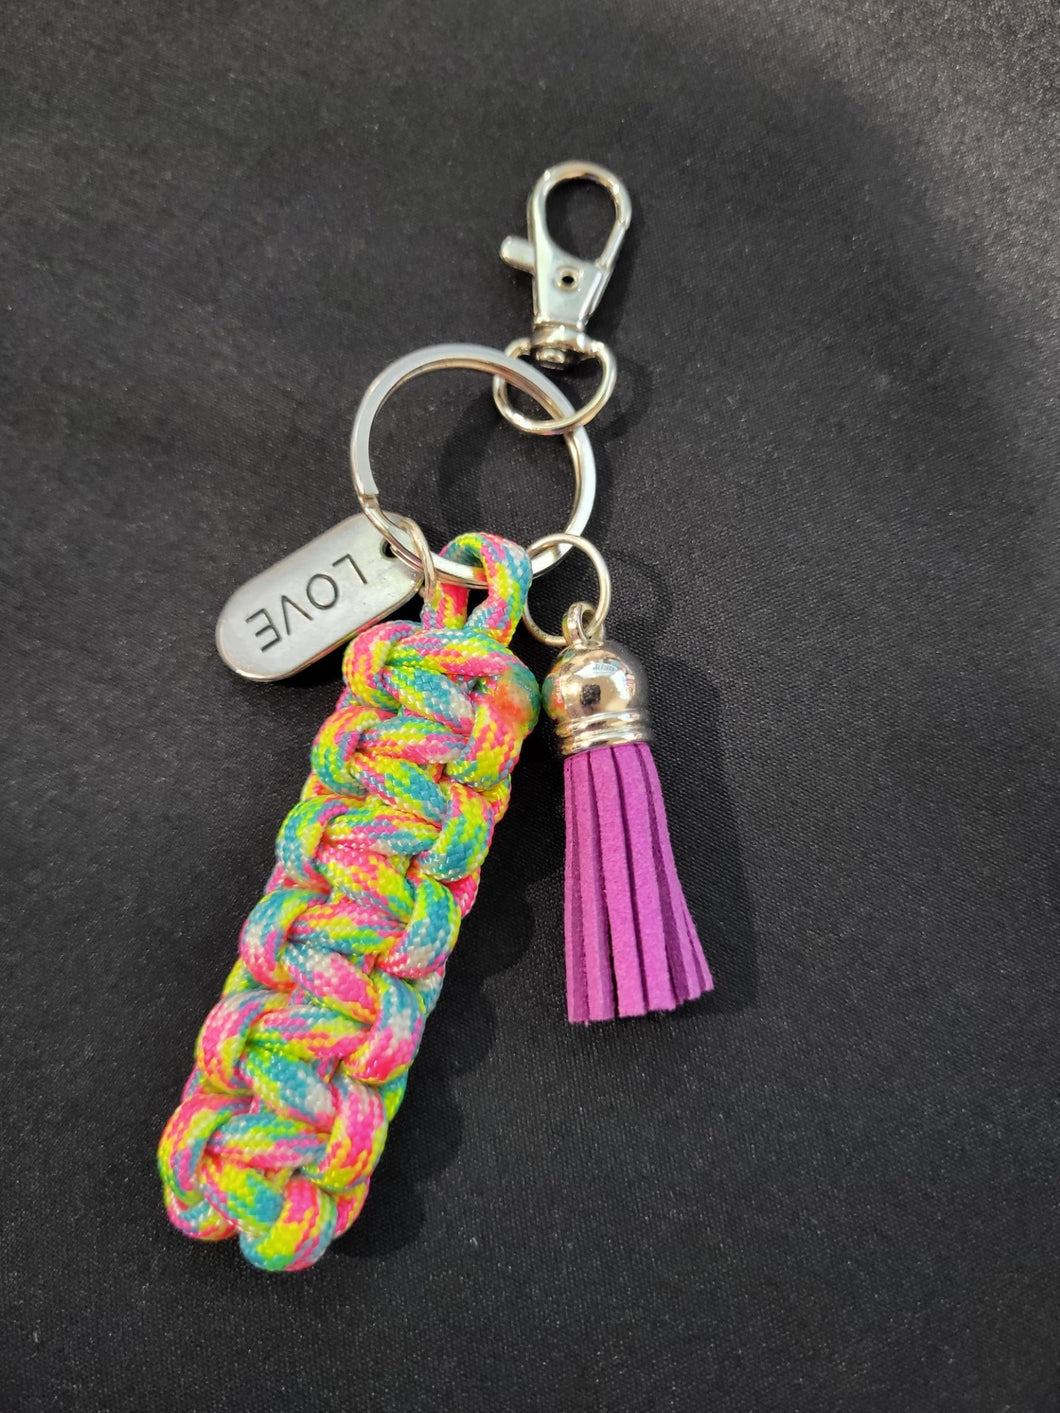 Paracord Key Chain- Neon Rainbow with Purple tassel & Love Charms